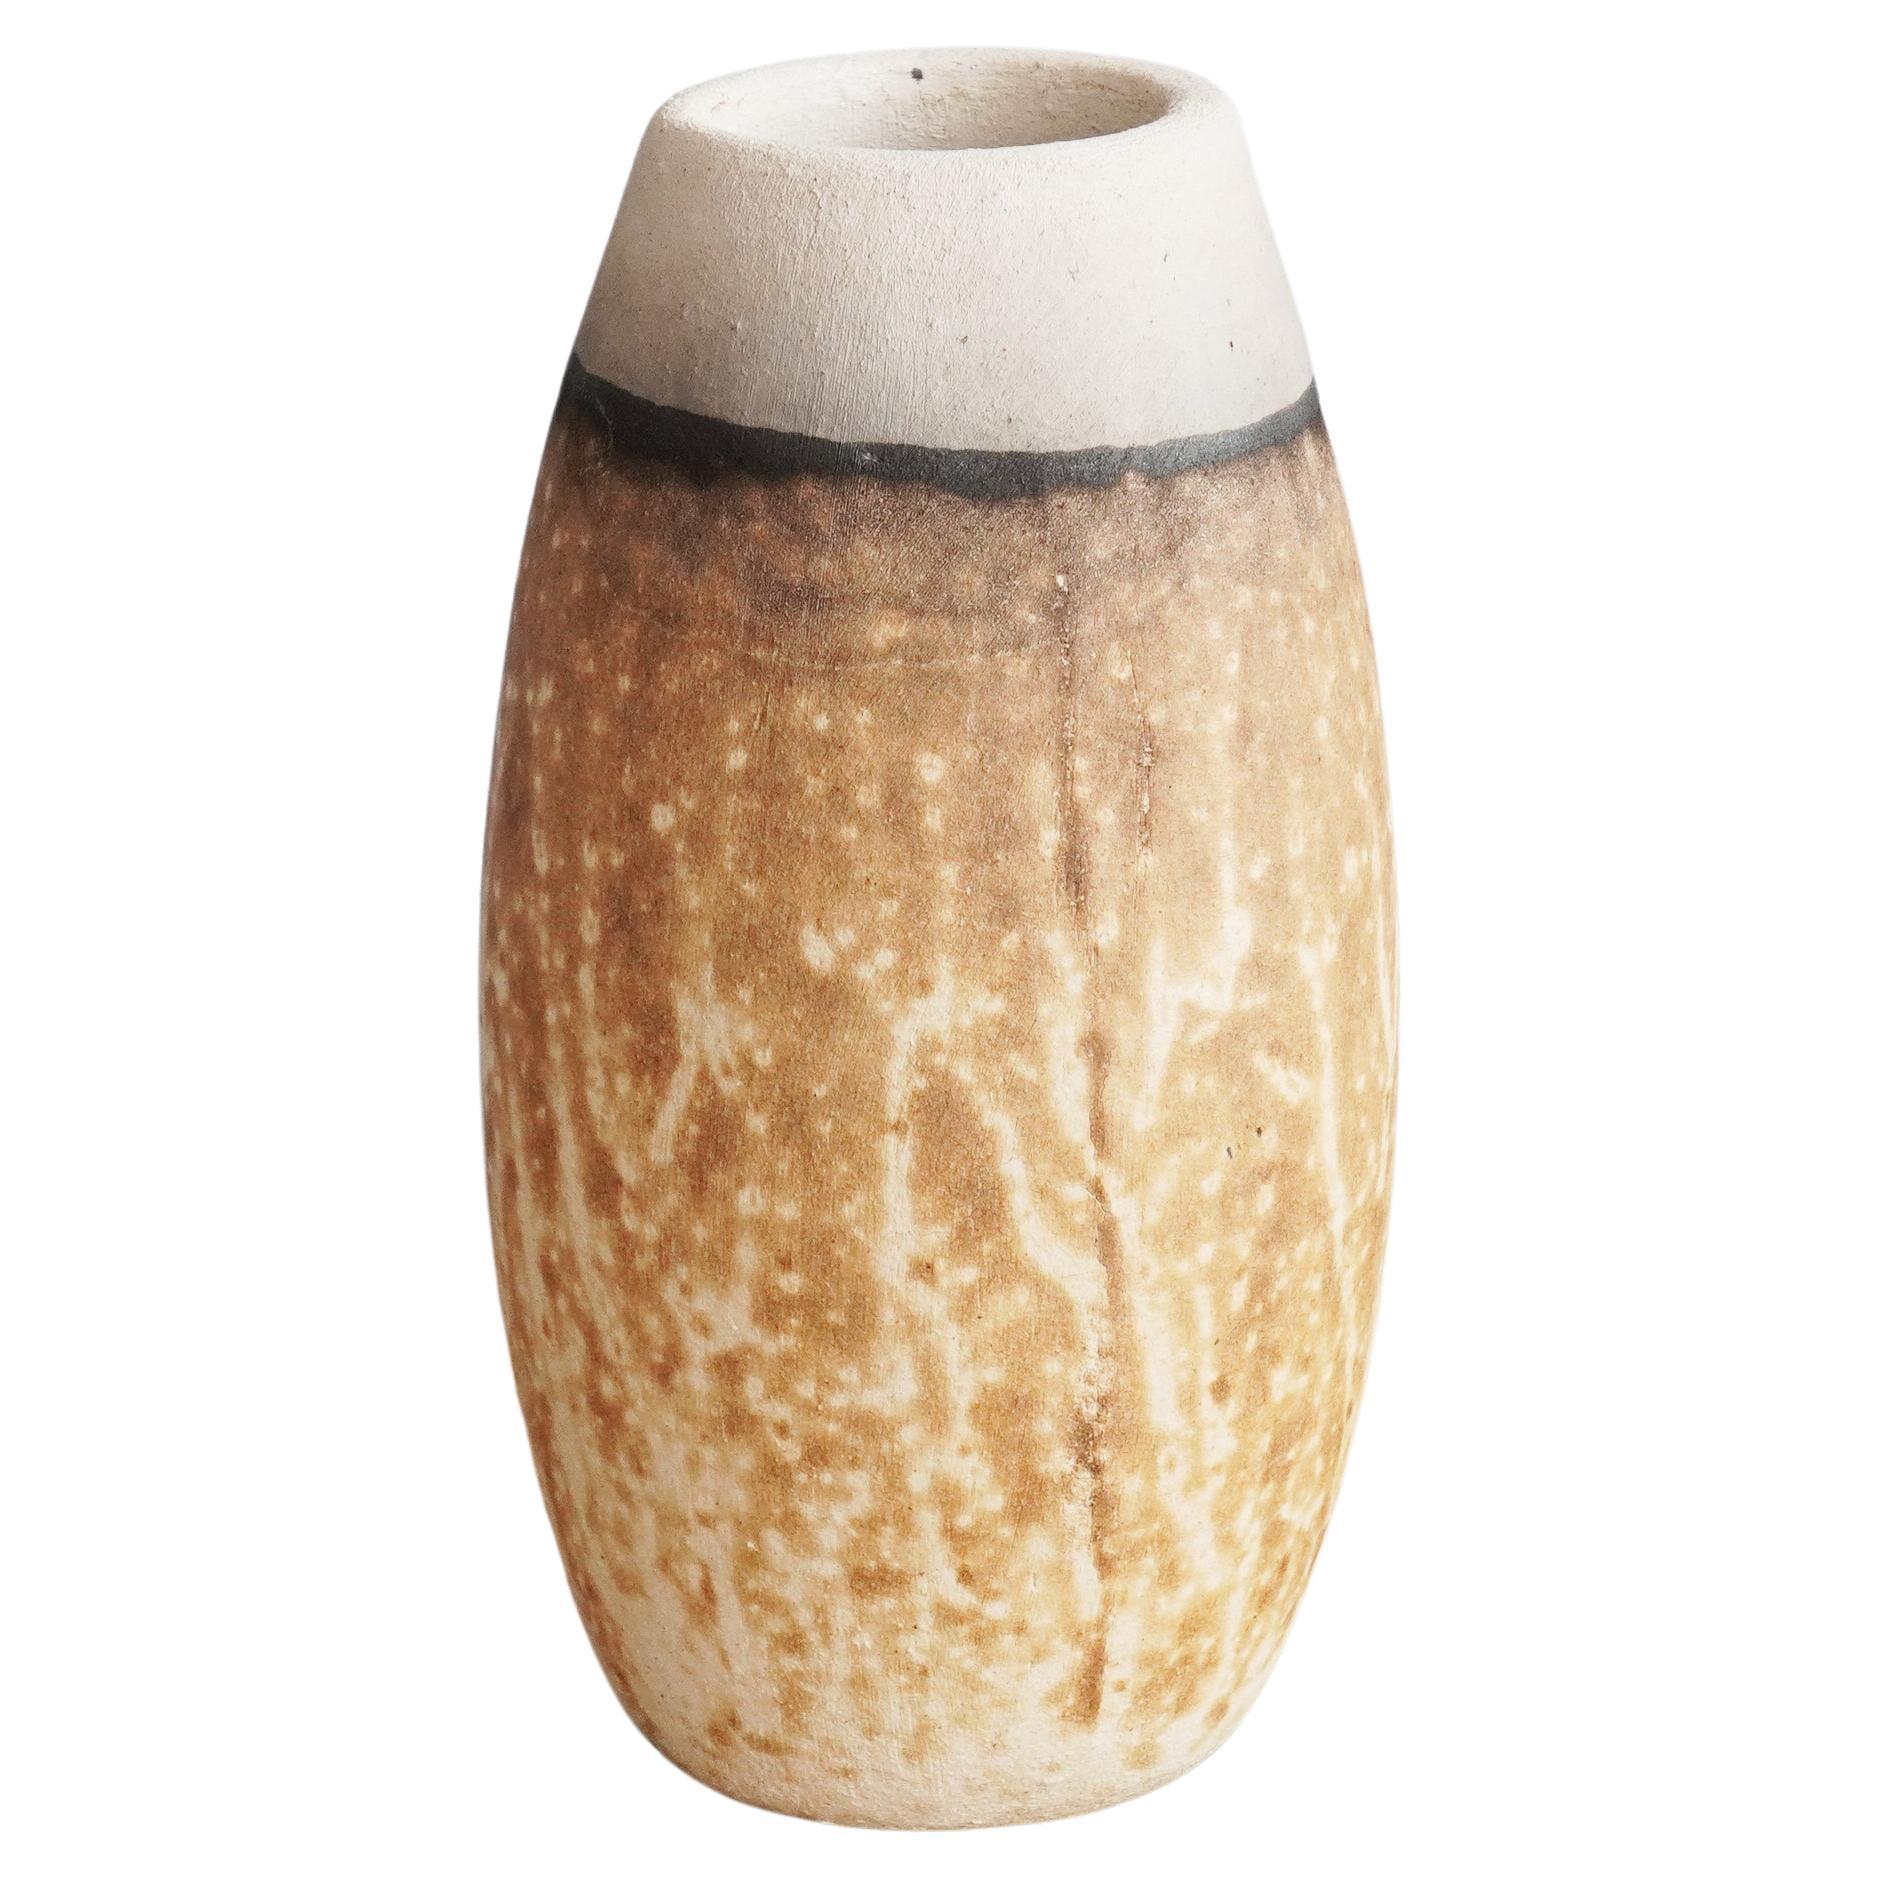 Tsuri Raku Pottery Vase - Obvara - Handmade Ceramic Home Decor Gift For Sale